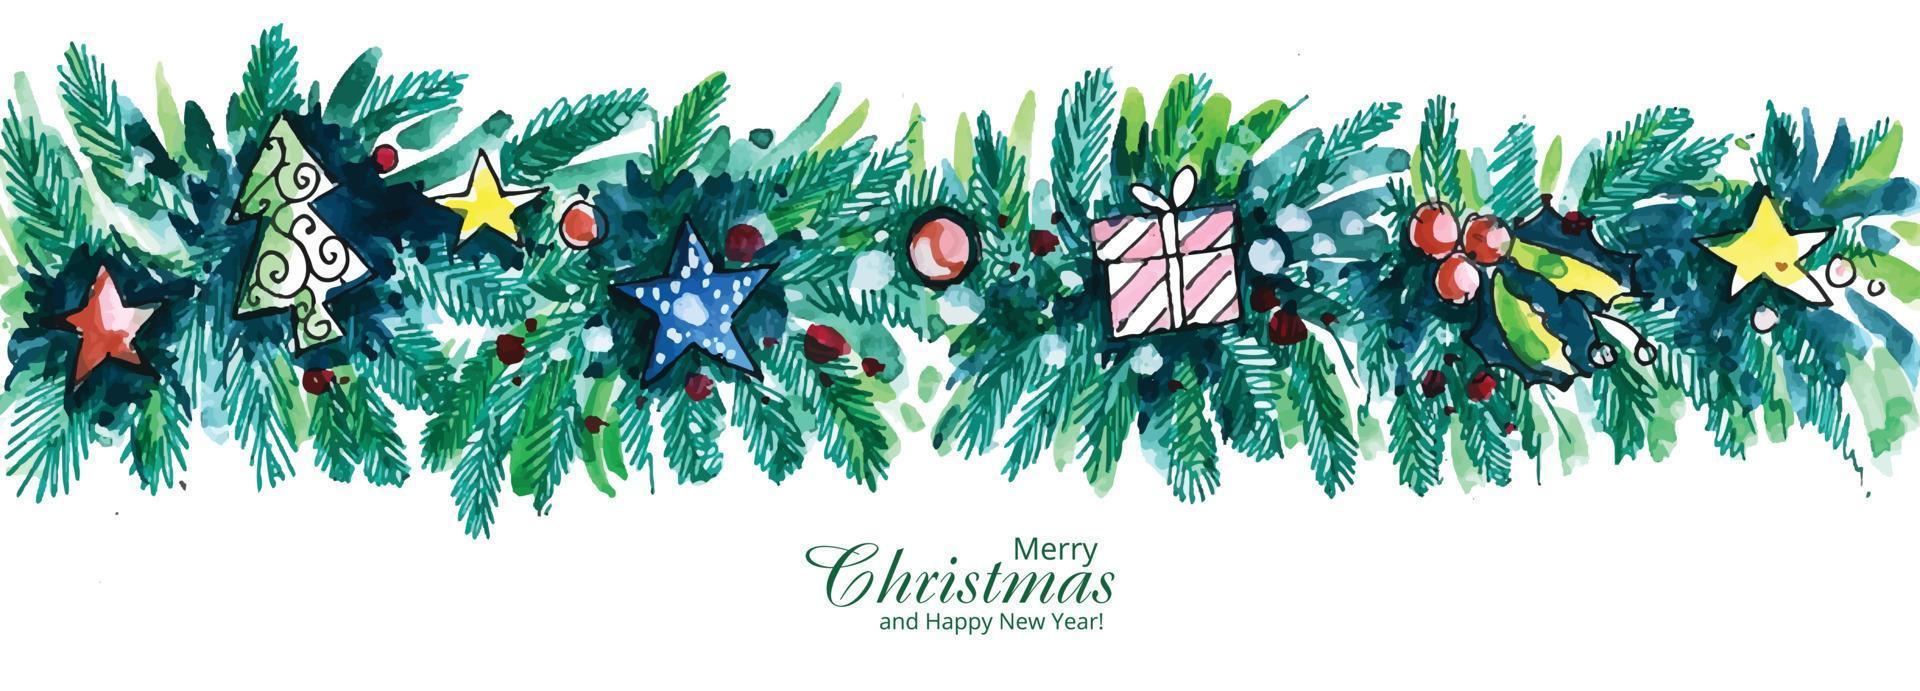 Decorative christmas wreath banner card design vector